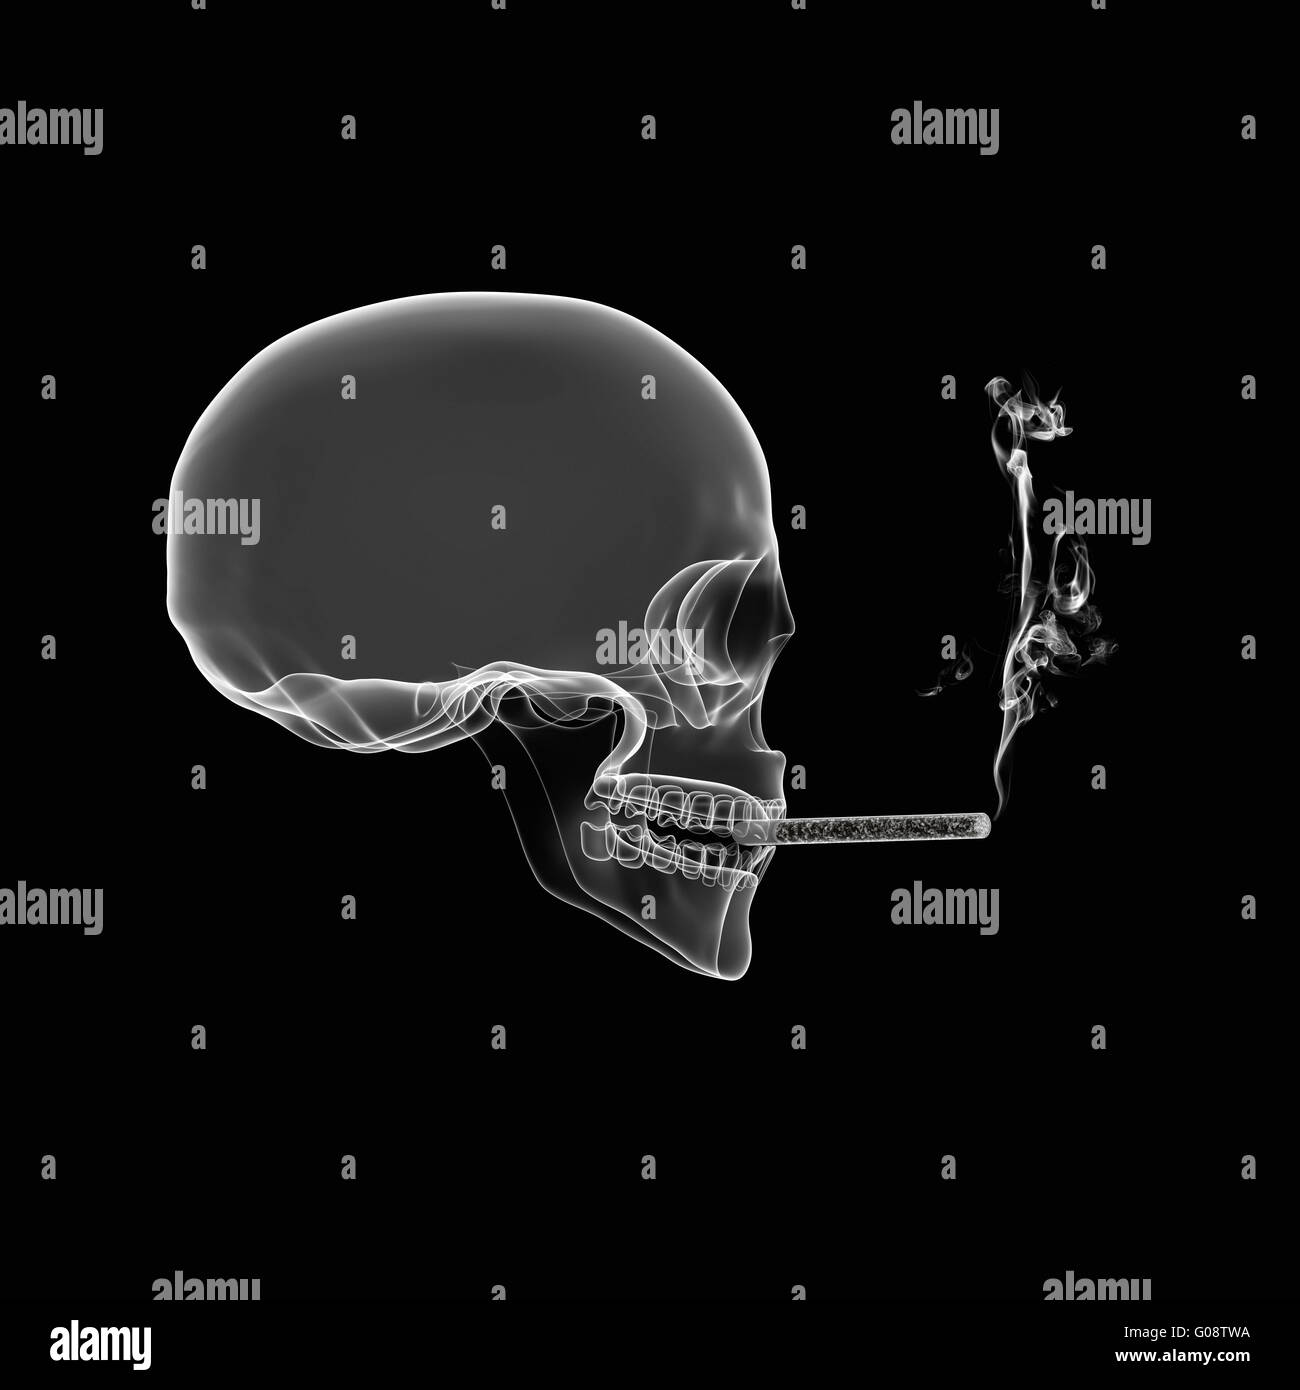 Human Skull smoking cigarette Stock Photo